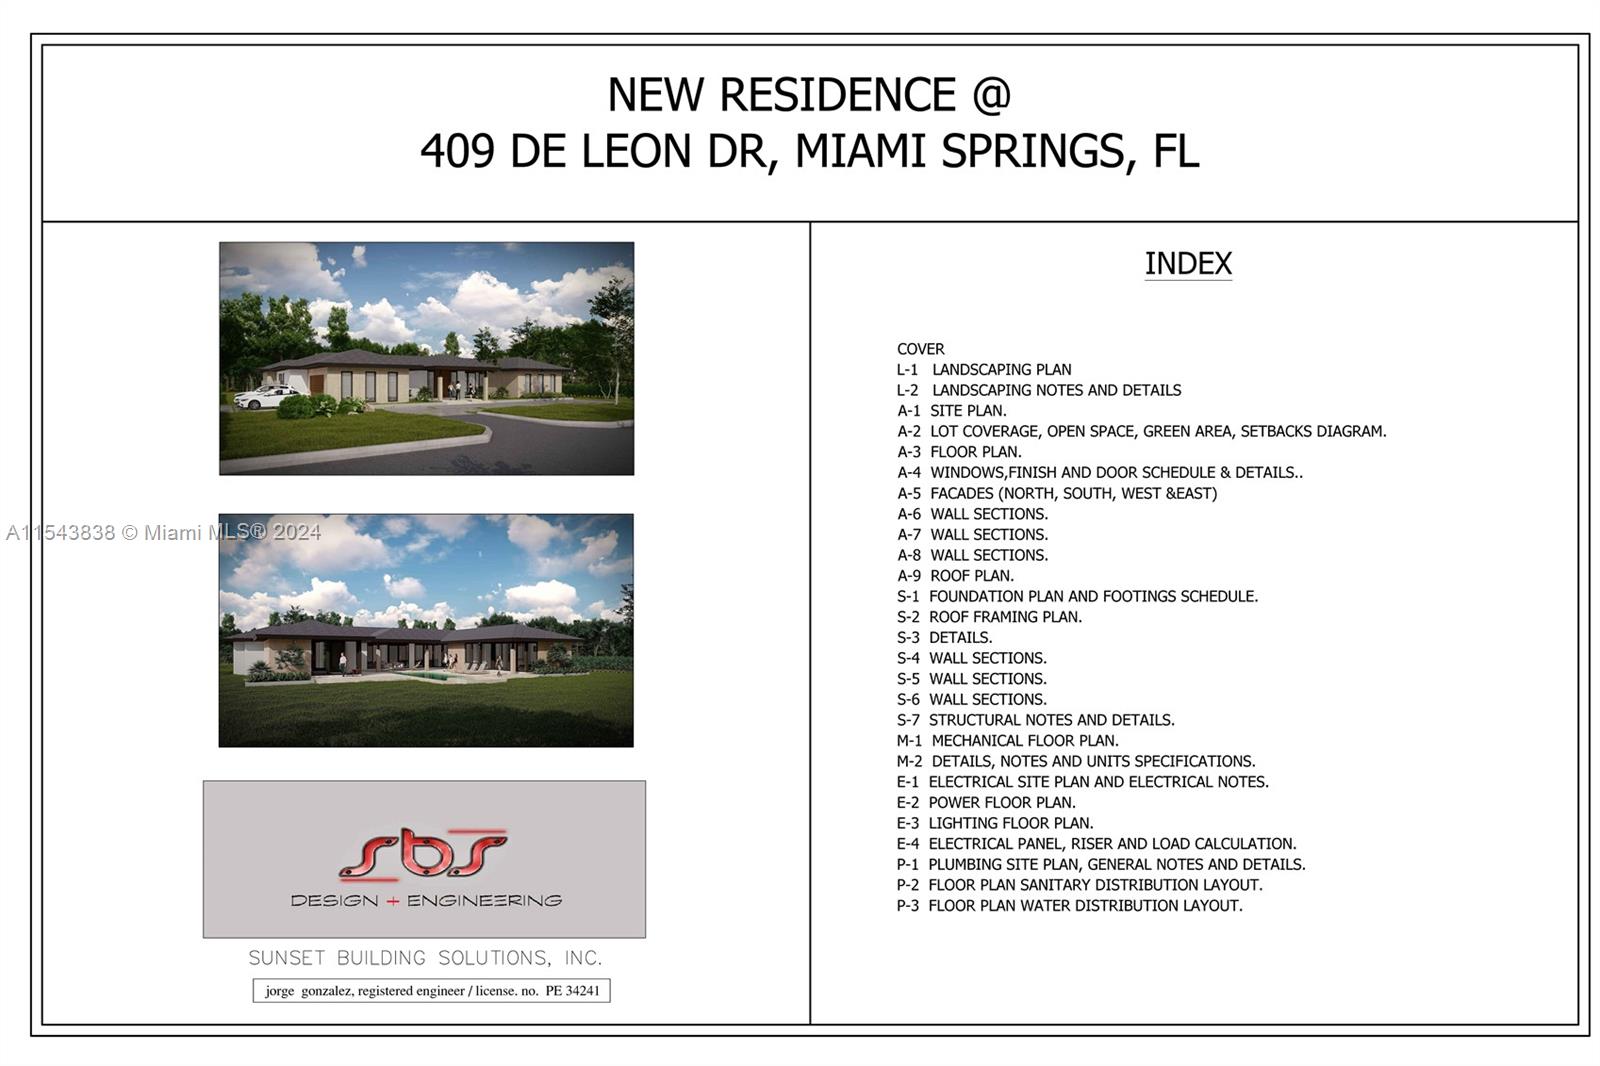 409 De Leon Dr, Miami Springs, Miami-Dade County, Florida - 5 Bedrooms  
5 Bathrooms - 